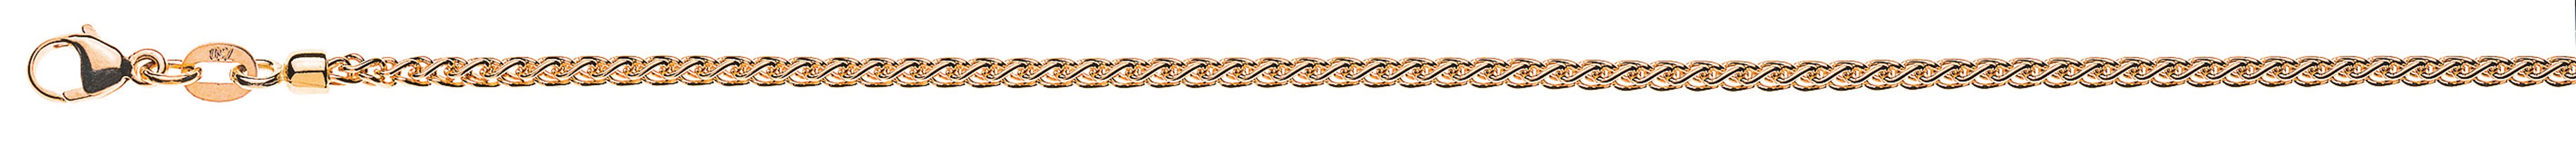 AURONOS Prestige Collier chaîne en or rose 18K 55cm 2.15mm